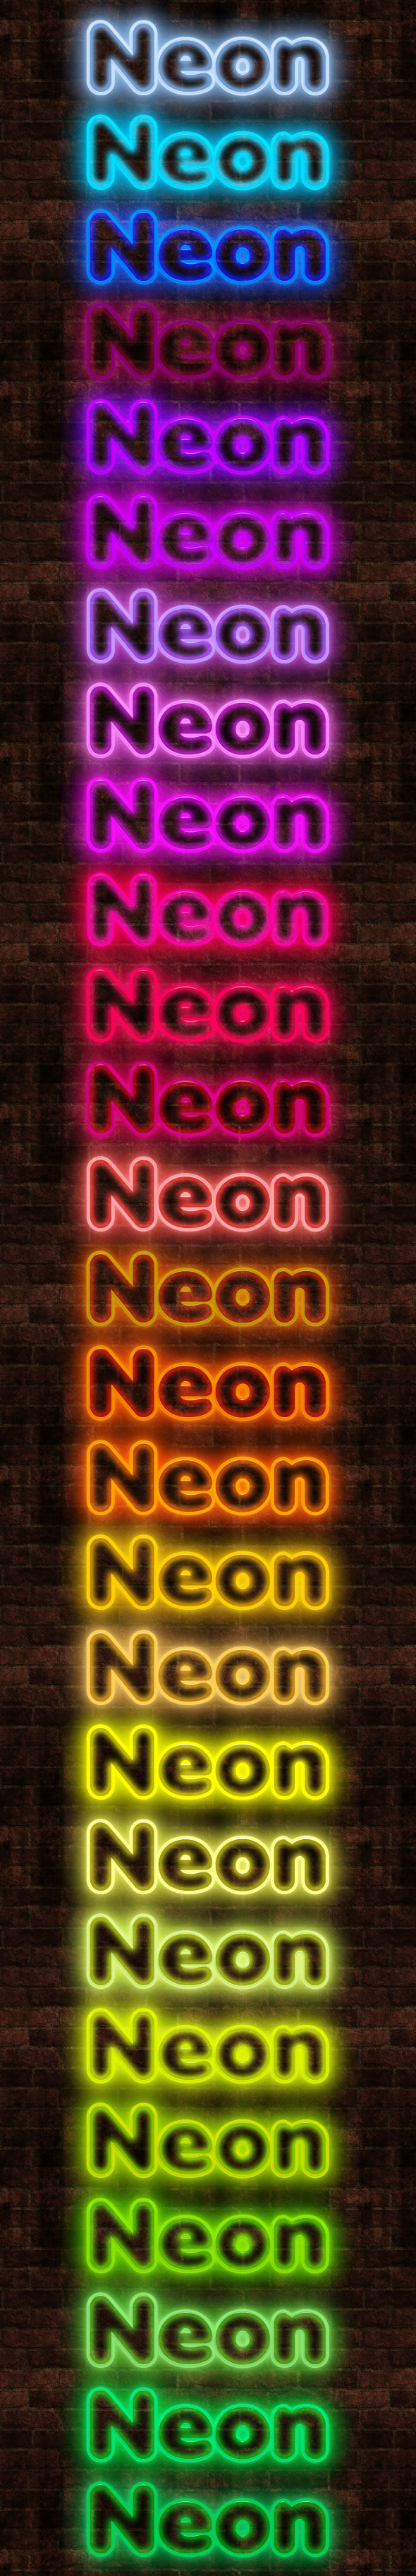 27 Neon Styles